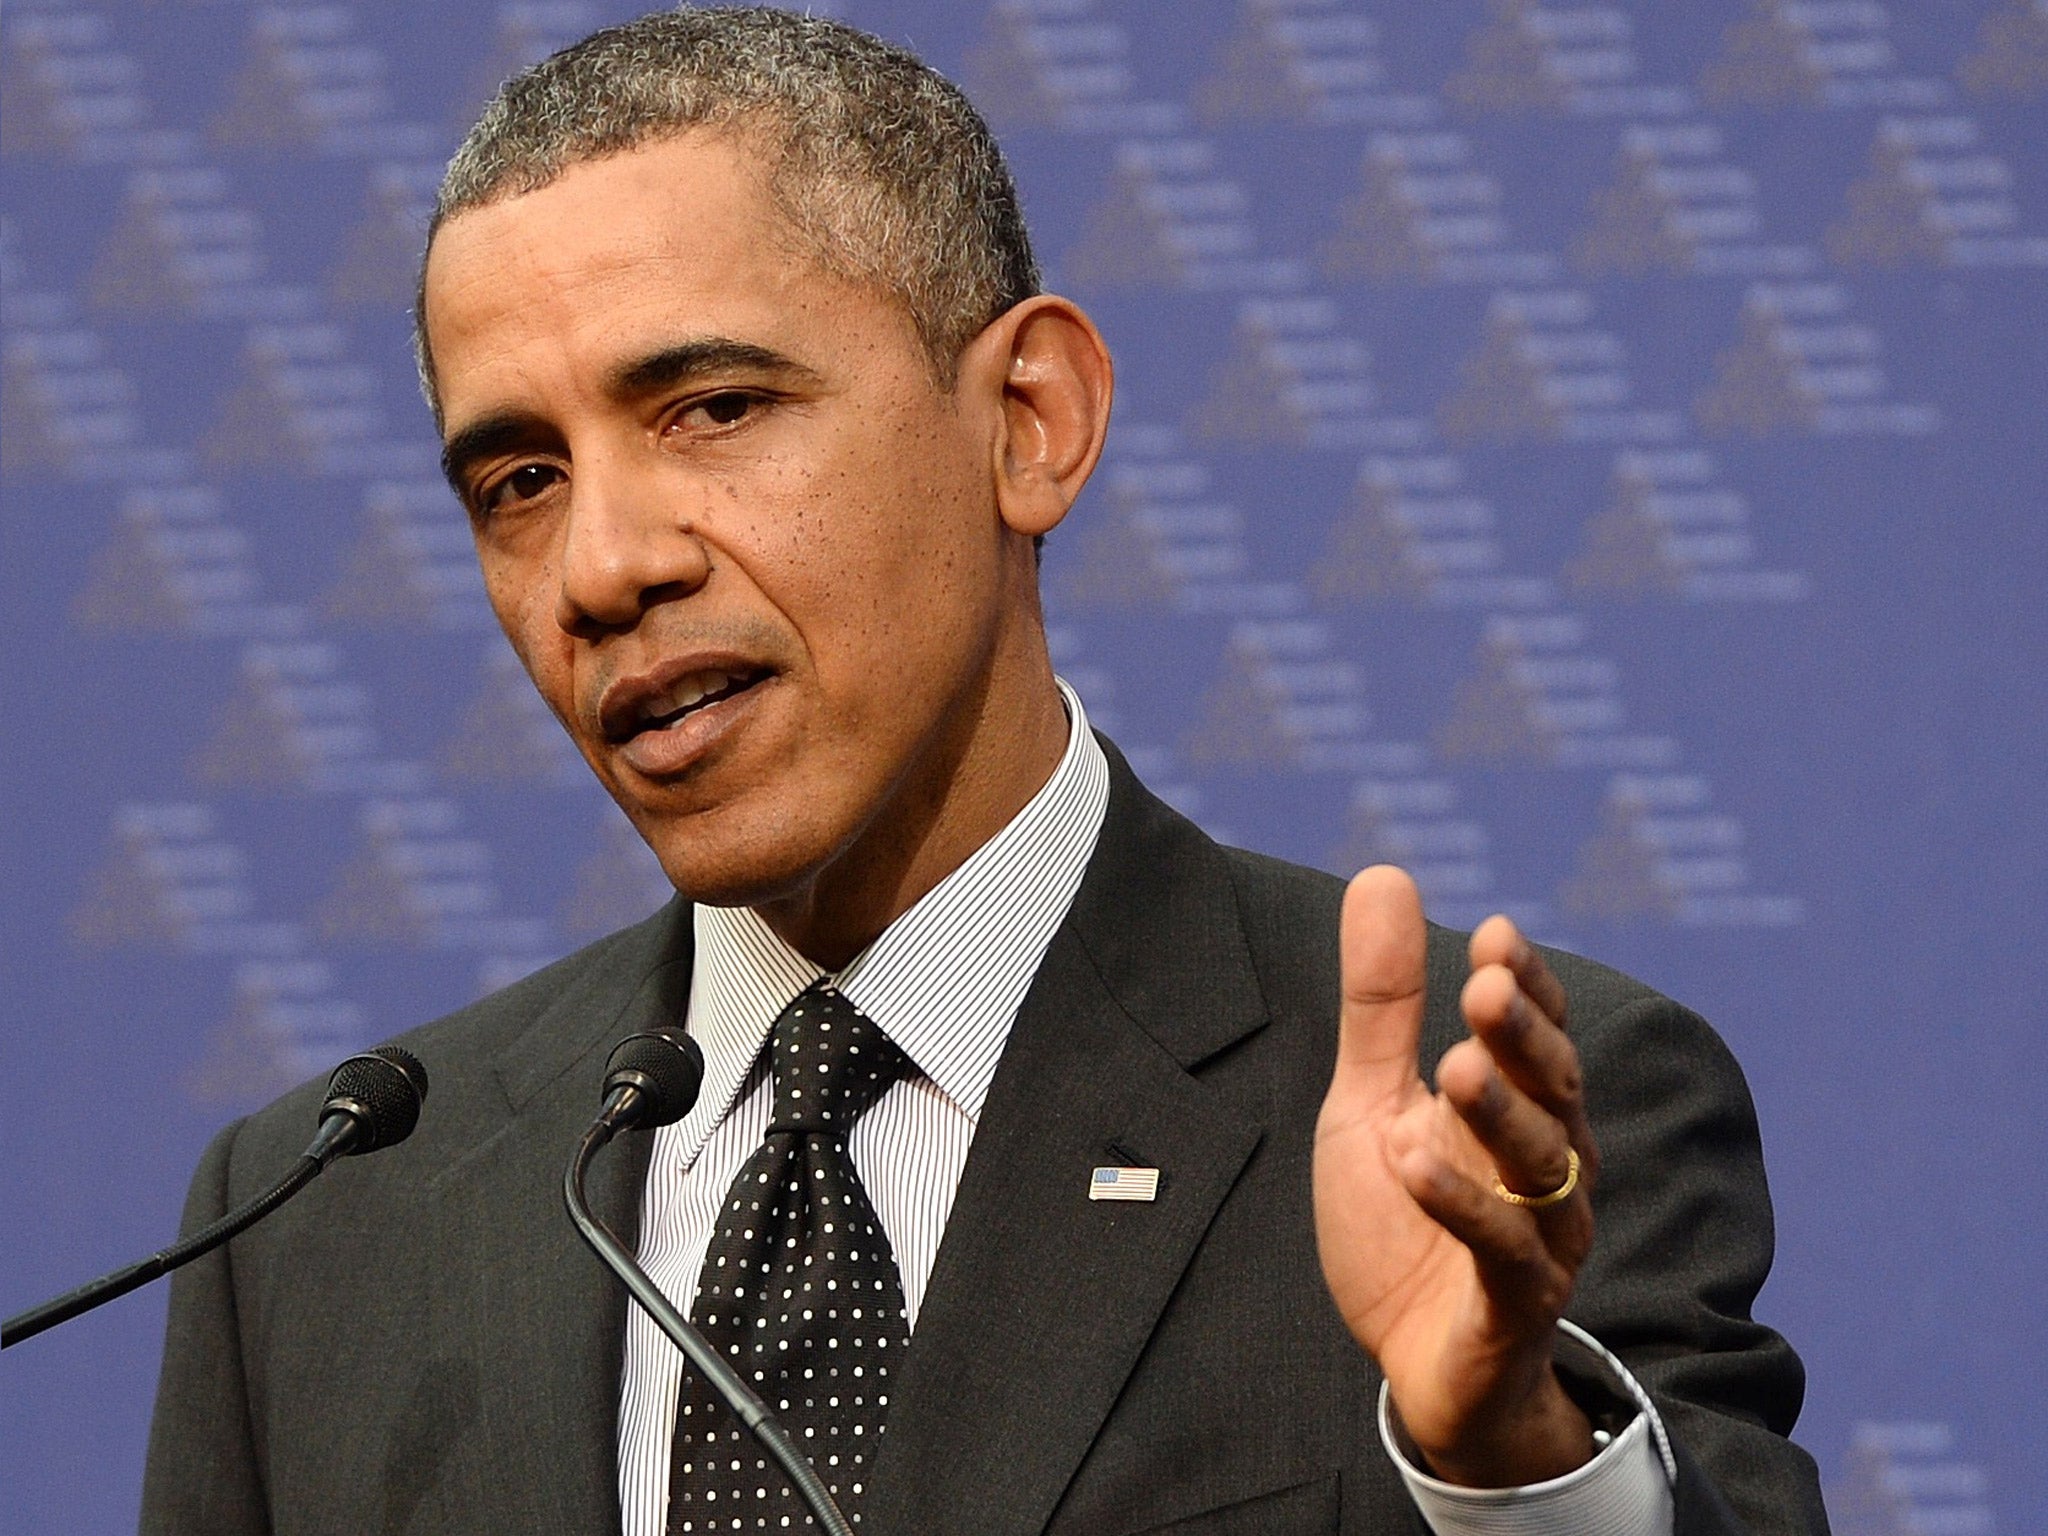 Barack Obama used the summit to toughen is rhetoric on the Ukraine crisis